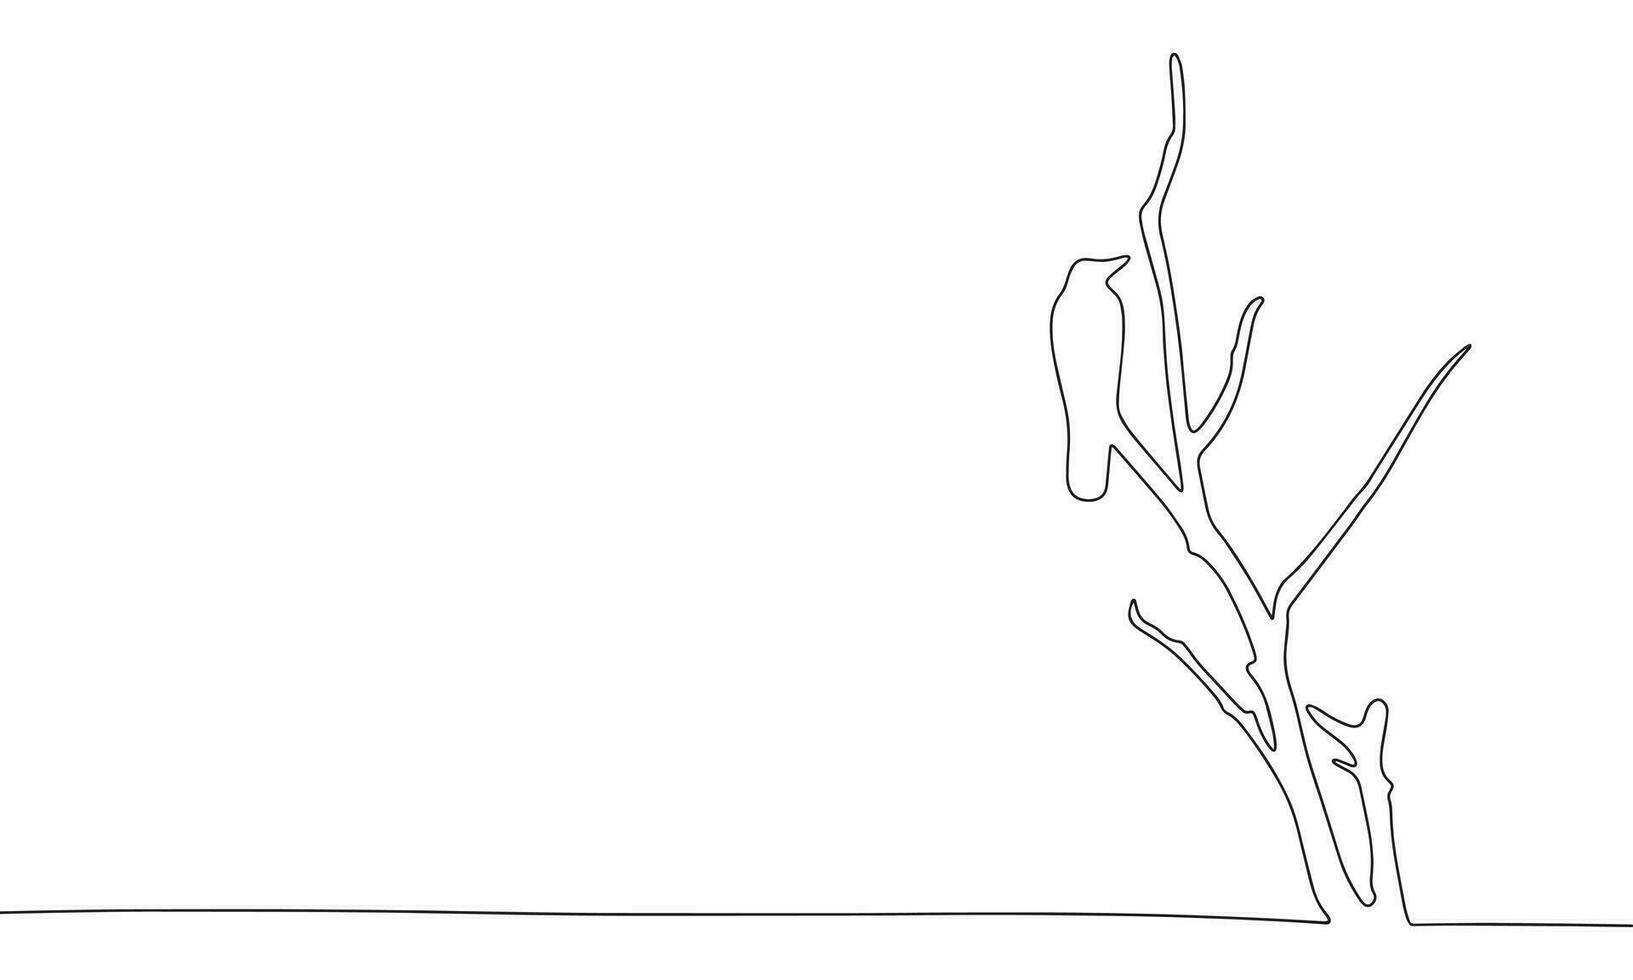 gala, fågel på gren ett linje kontinuerlig vektor illustration. linje konst begrepp fågel baner. översikt, silhuett vektor illustration.